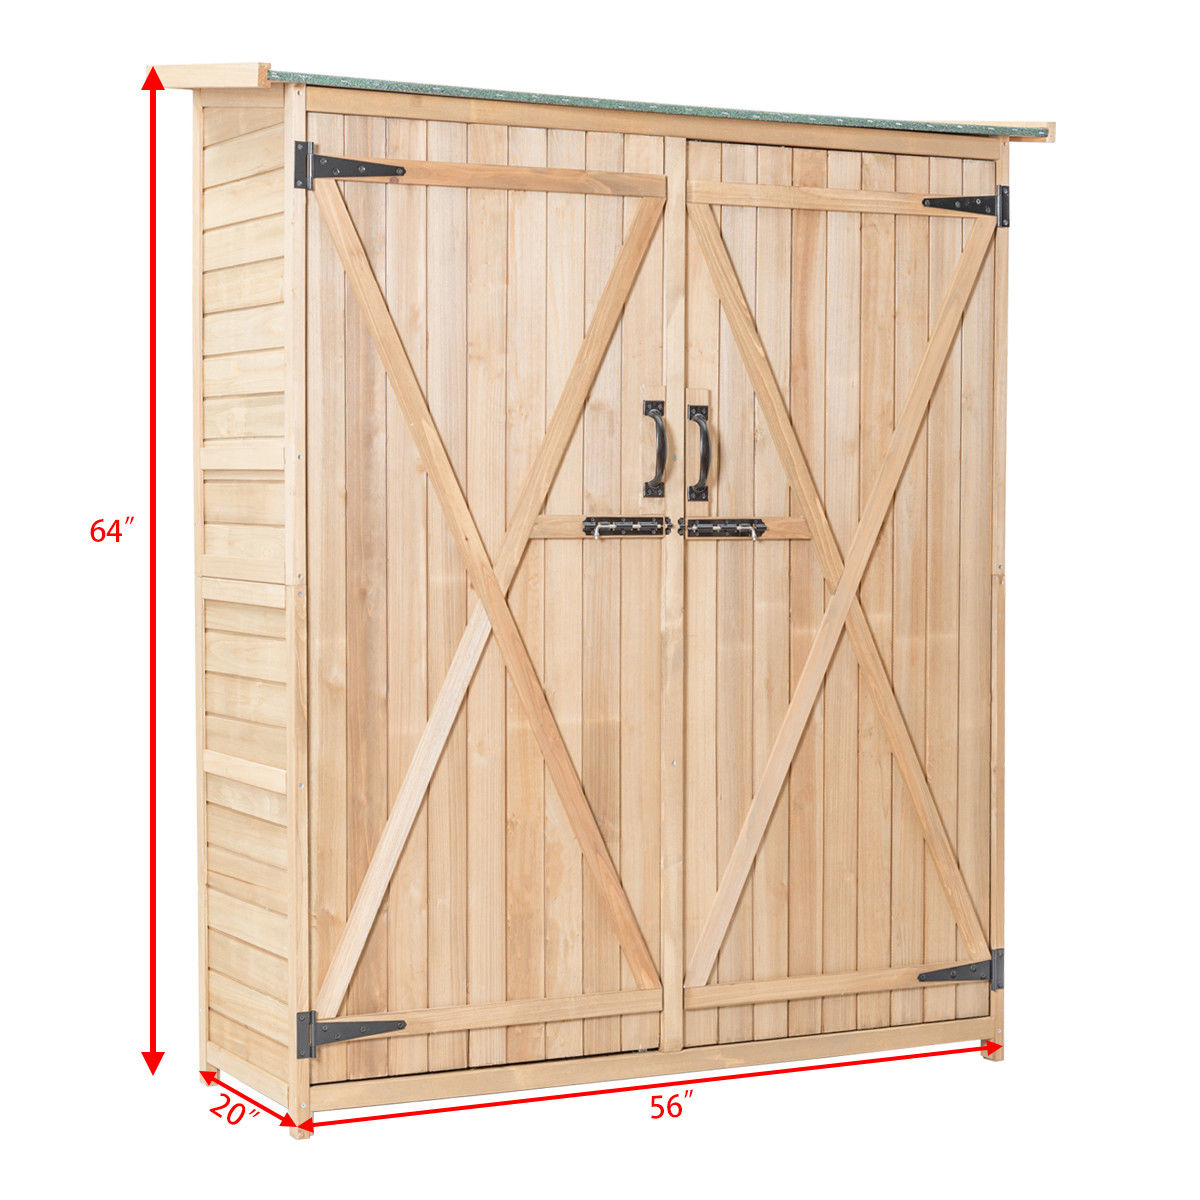 Goplus Op3330 64 Wooden Storage Shed, Outdoor Shelving Unit With Doors